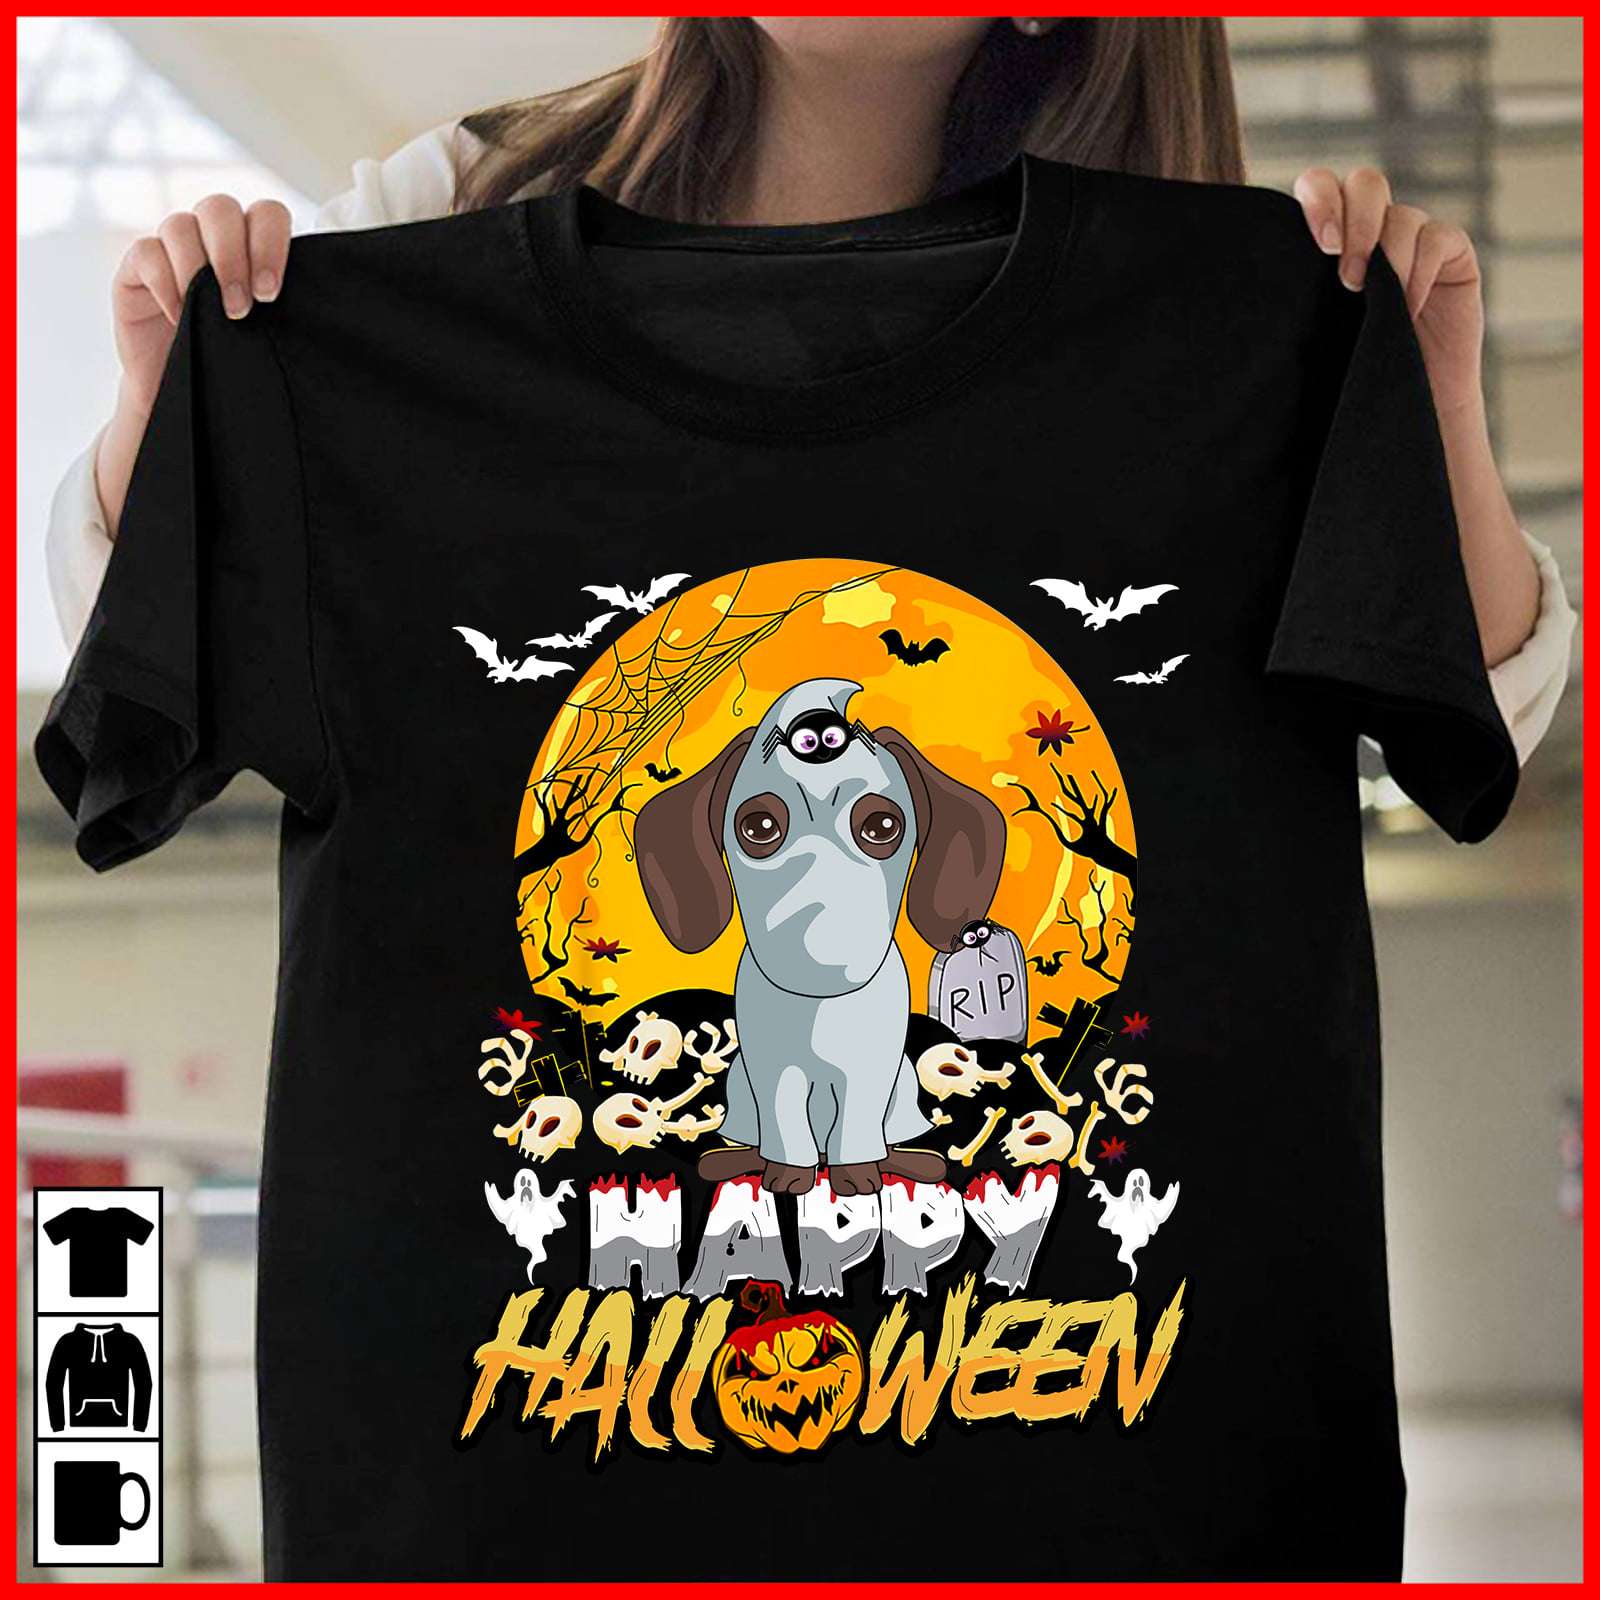 Happy Halloween - Halloween ghost costume, Halloween scary shirt